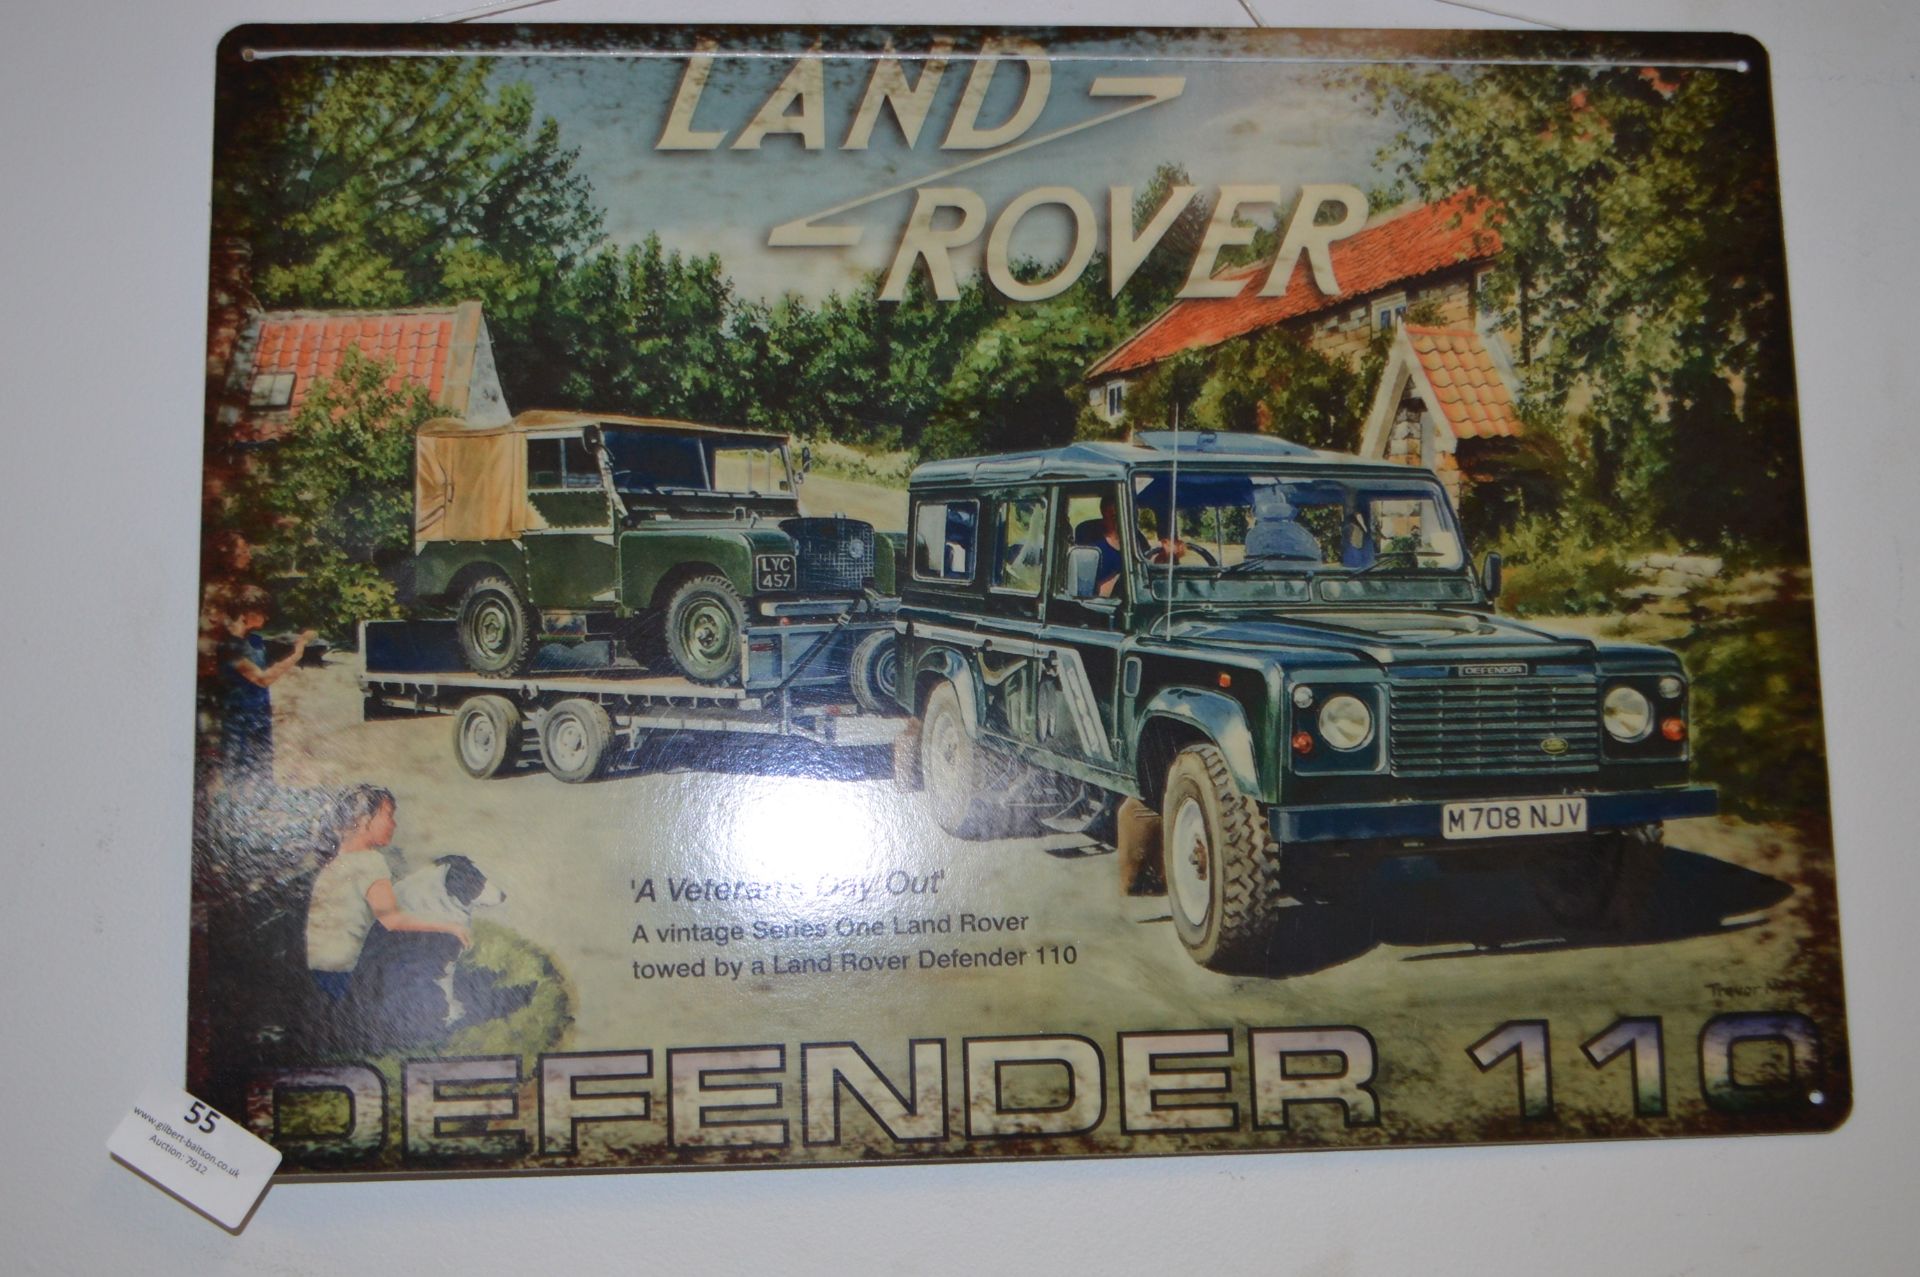 *Reproduction Enamel Sign - Land Rover Defender 110